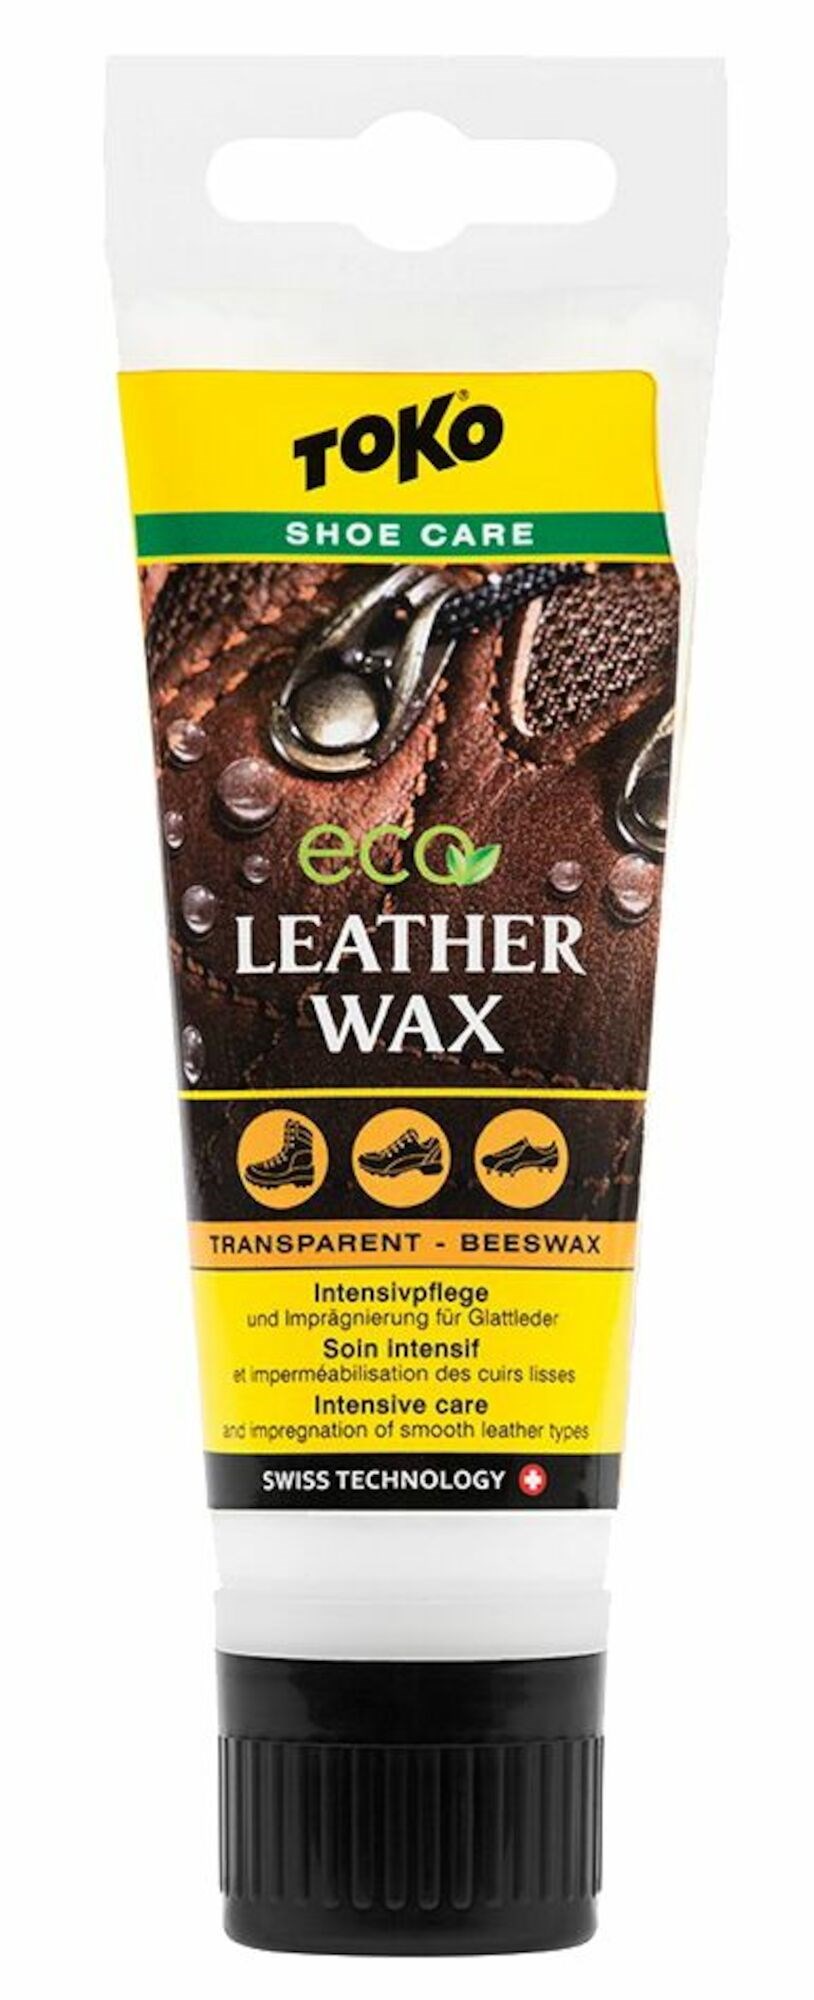 TOKO Leather Wax Transparent Beeswax